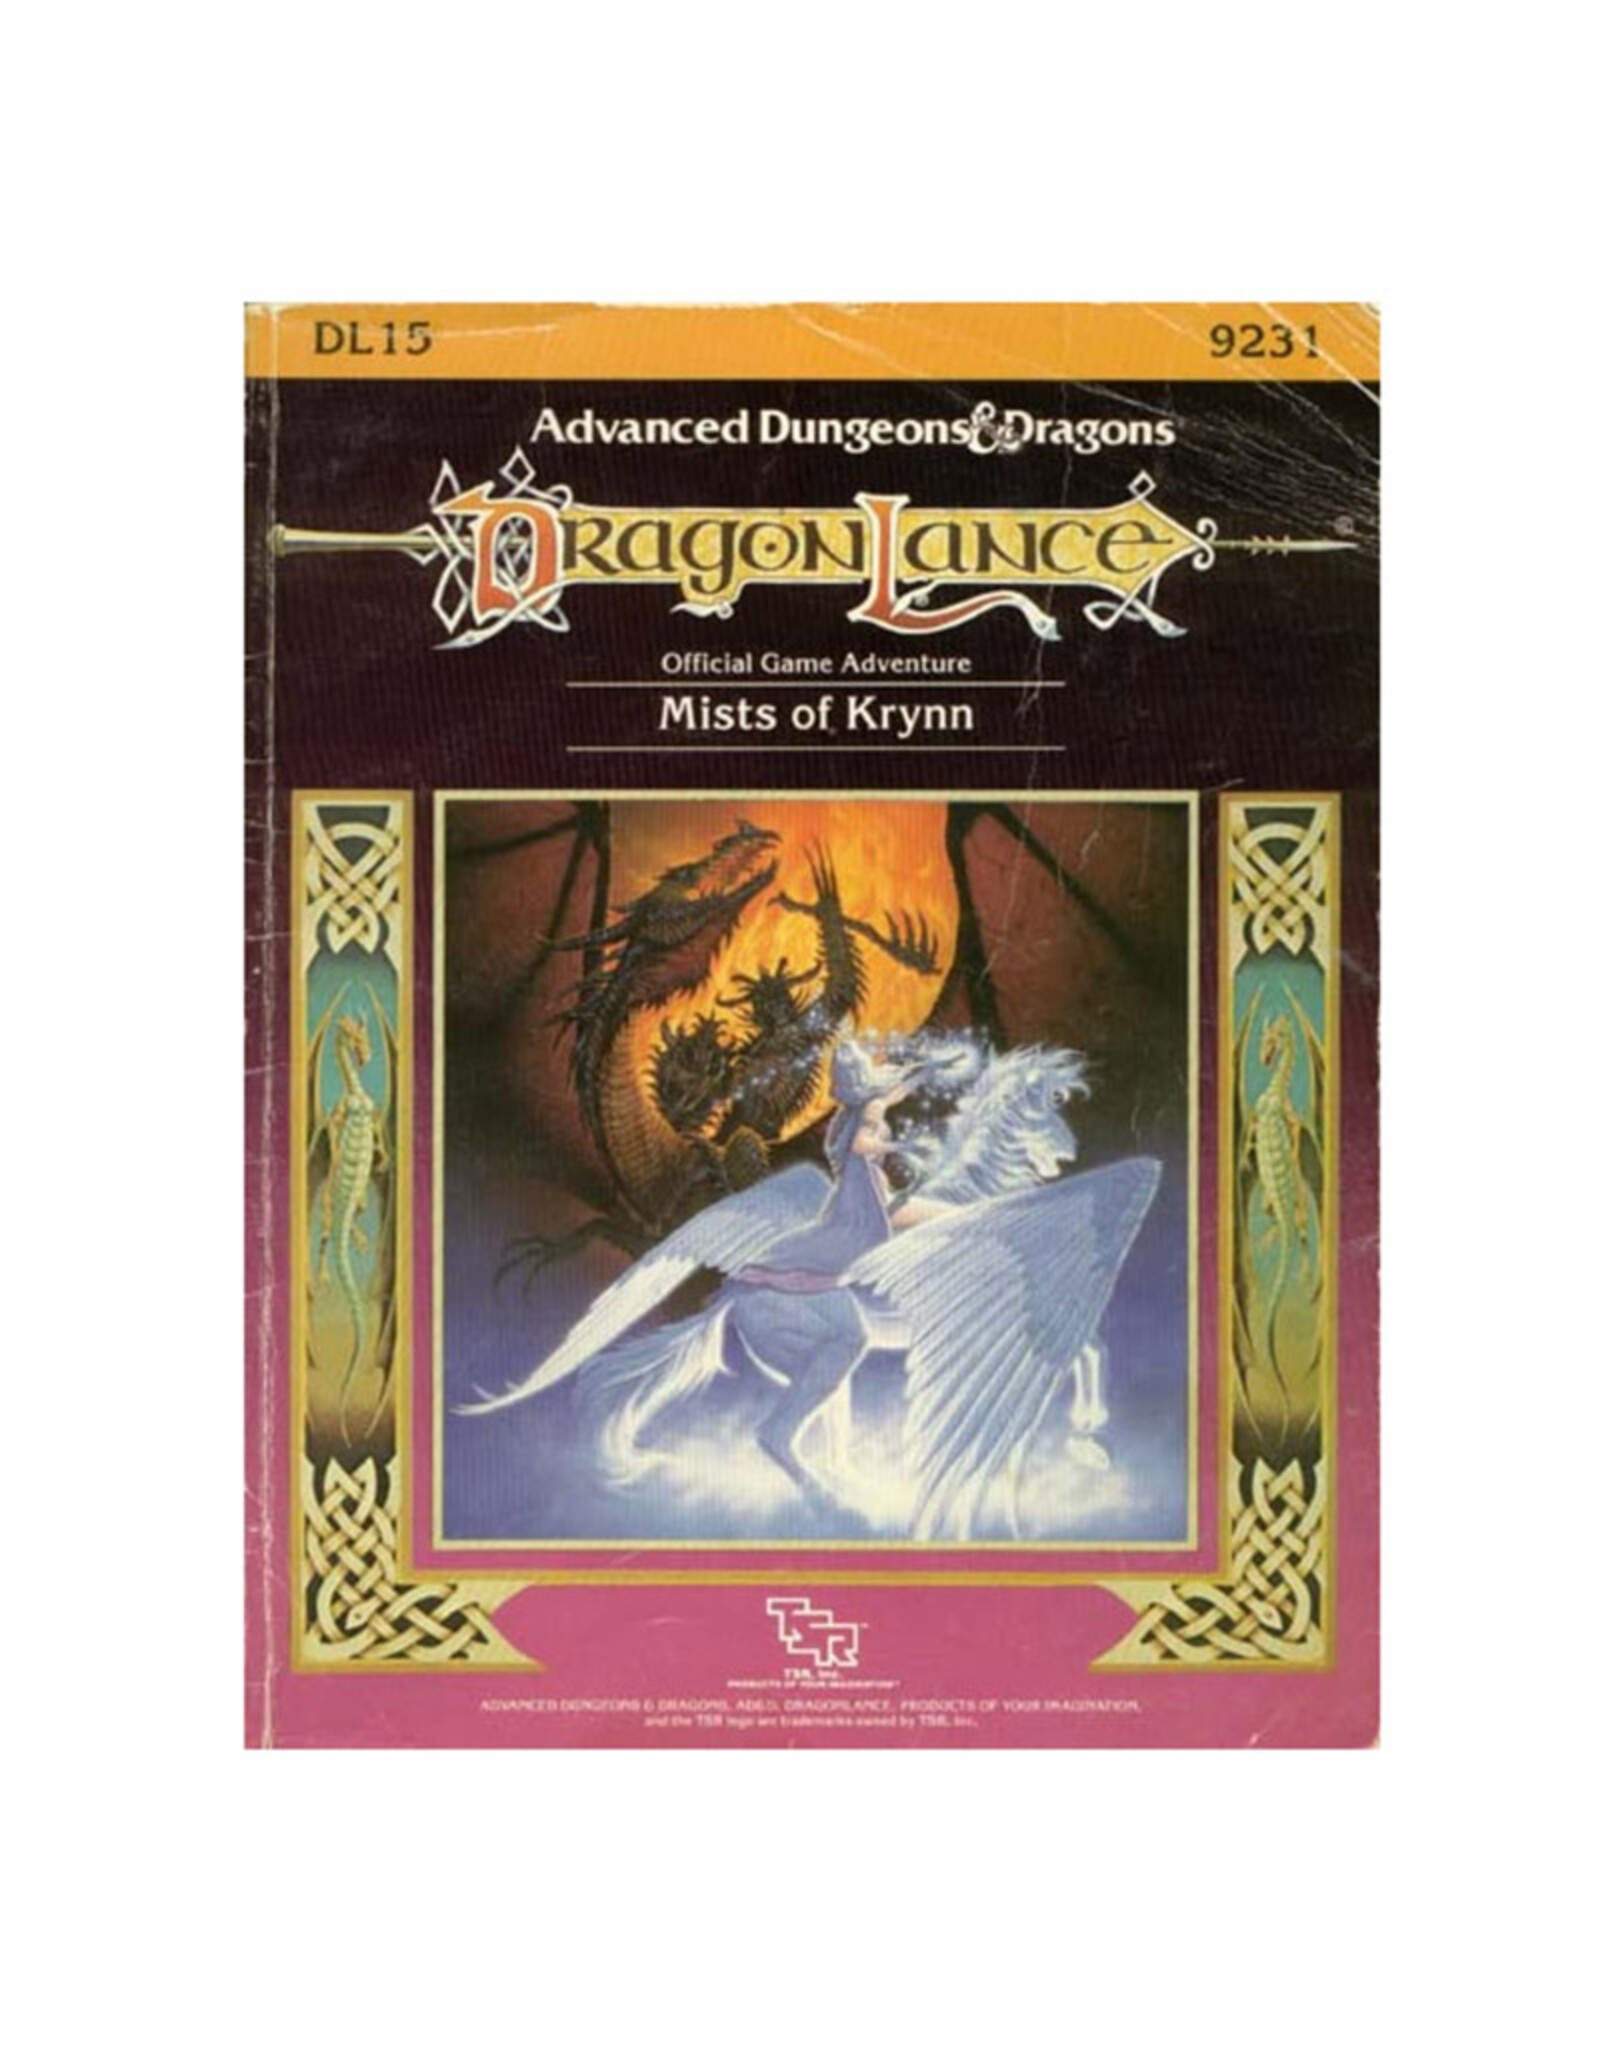 TSR USED - Advanced Dungeons & Dragons Dragon Lance: Mists of Krynn